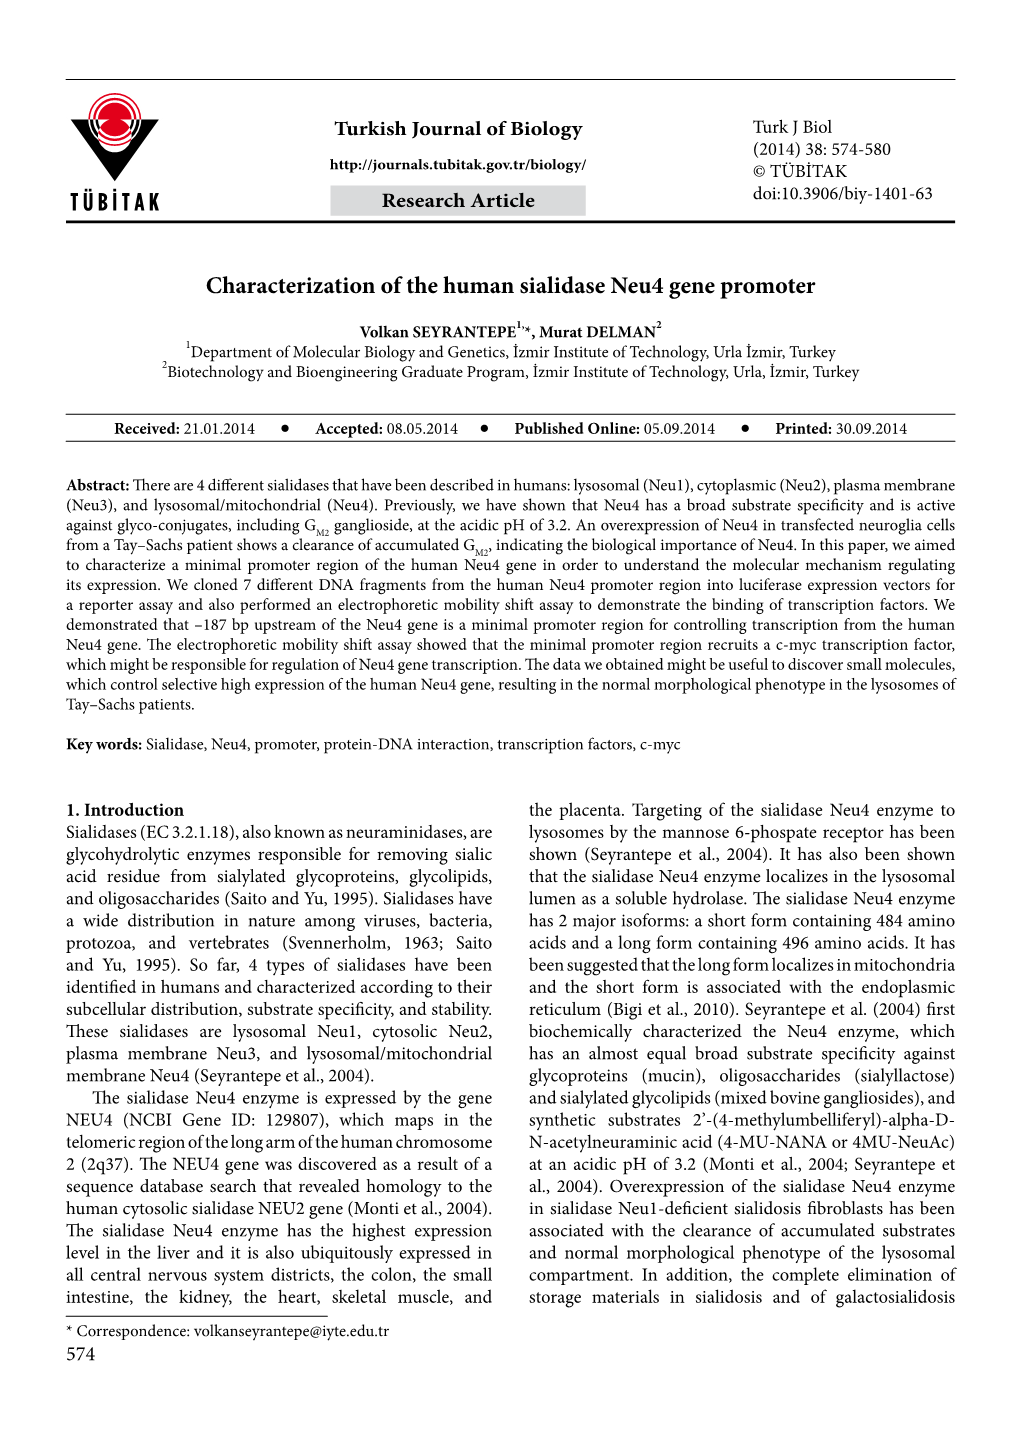 Characterization of the Human Sialidase Neu4 Gene Promoter